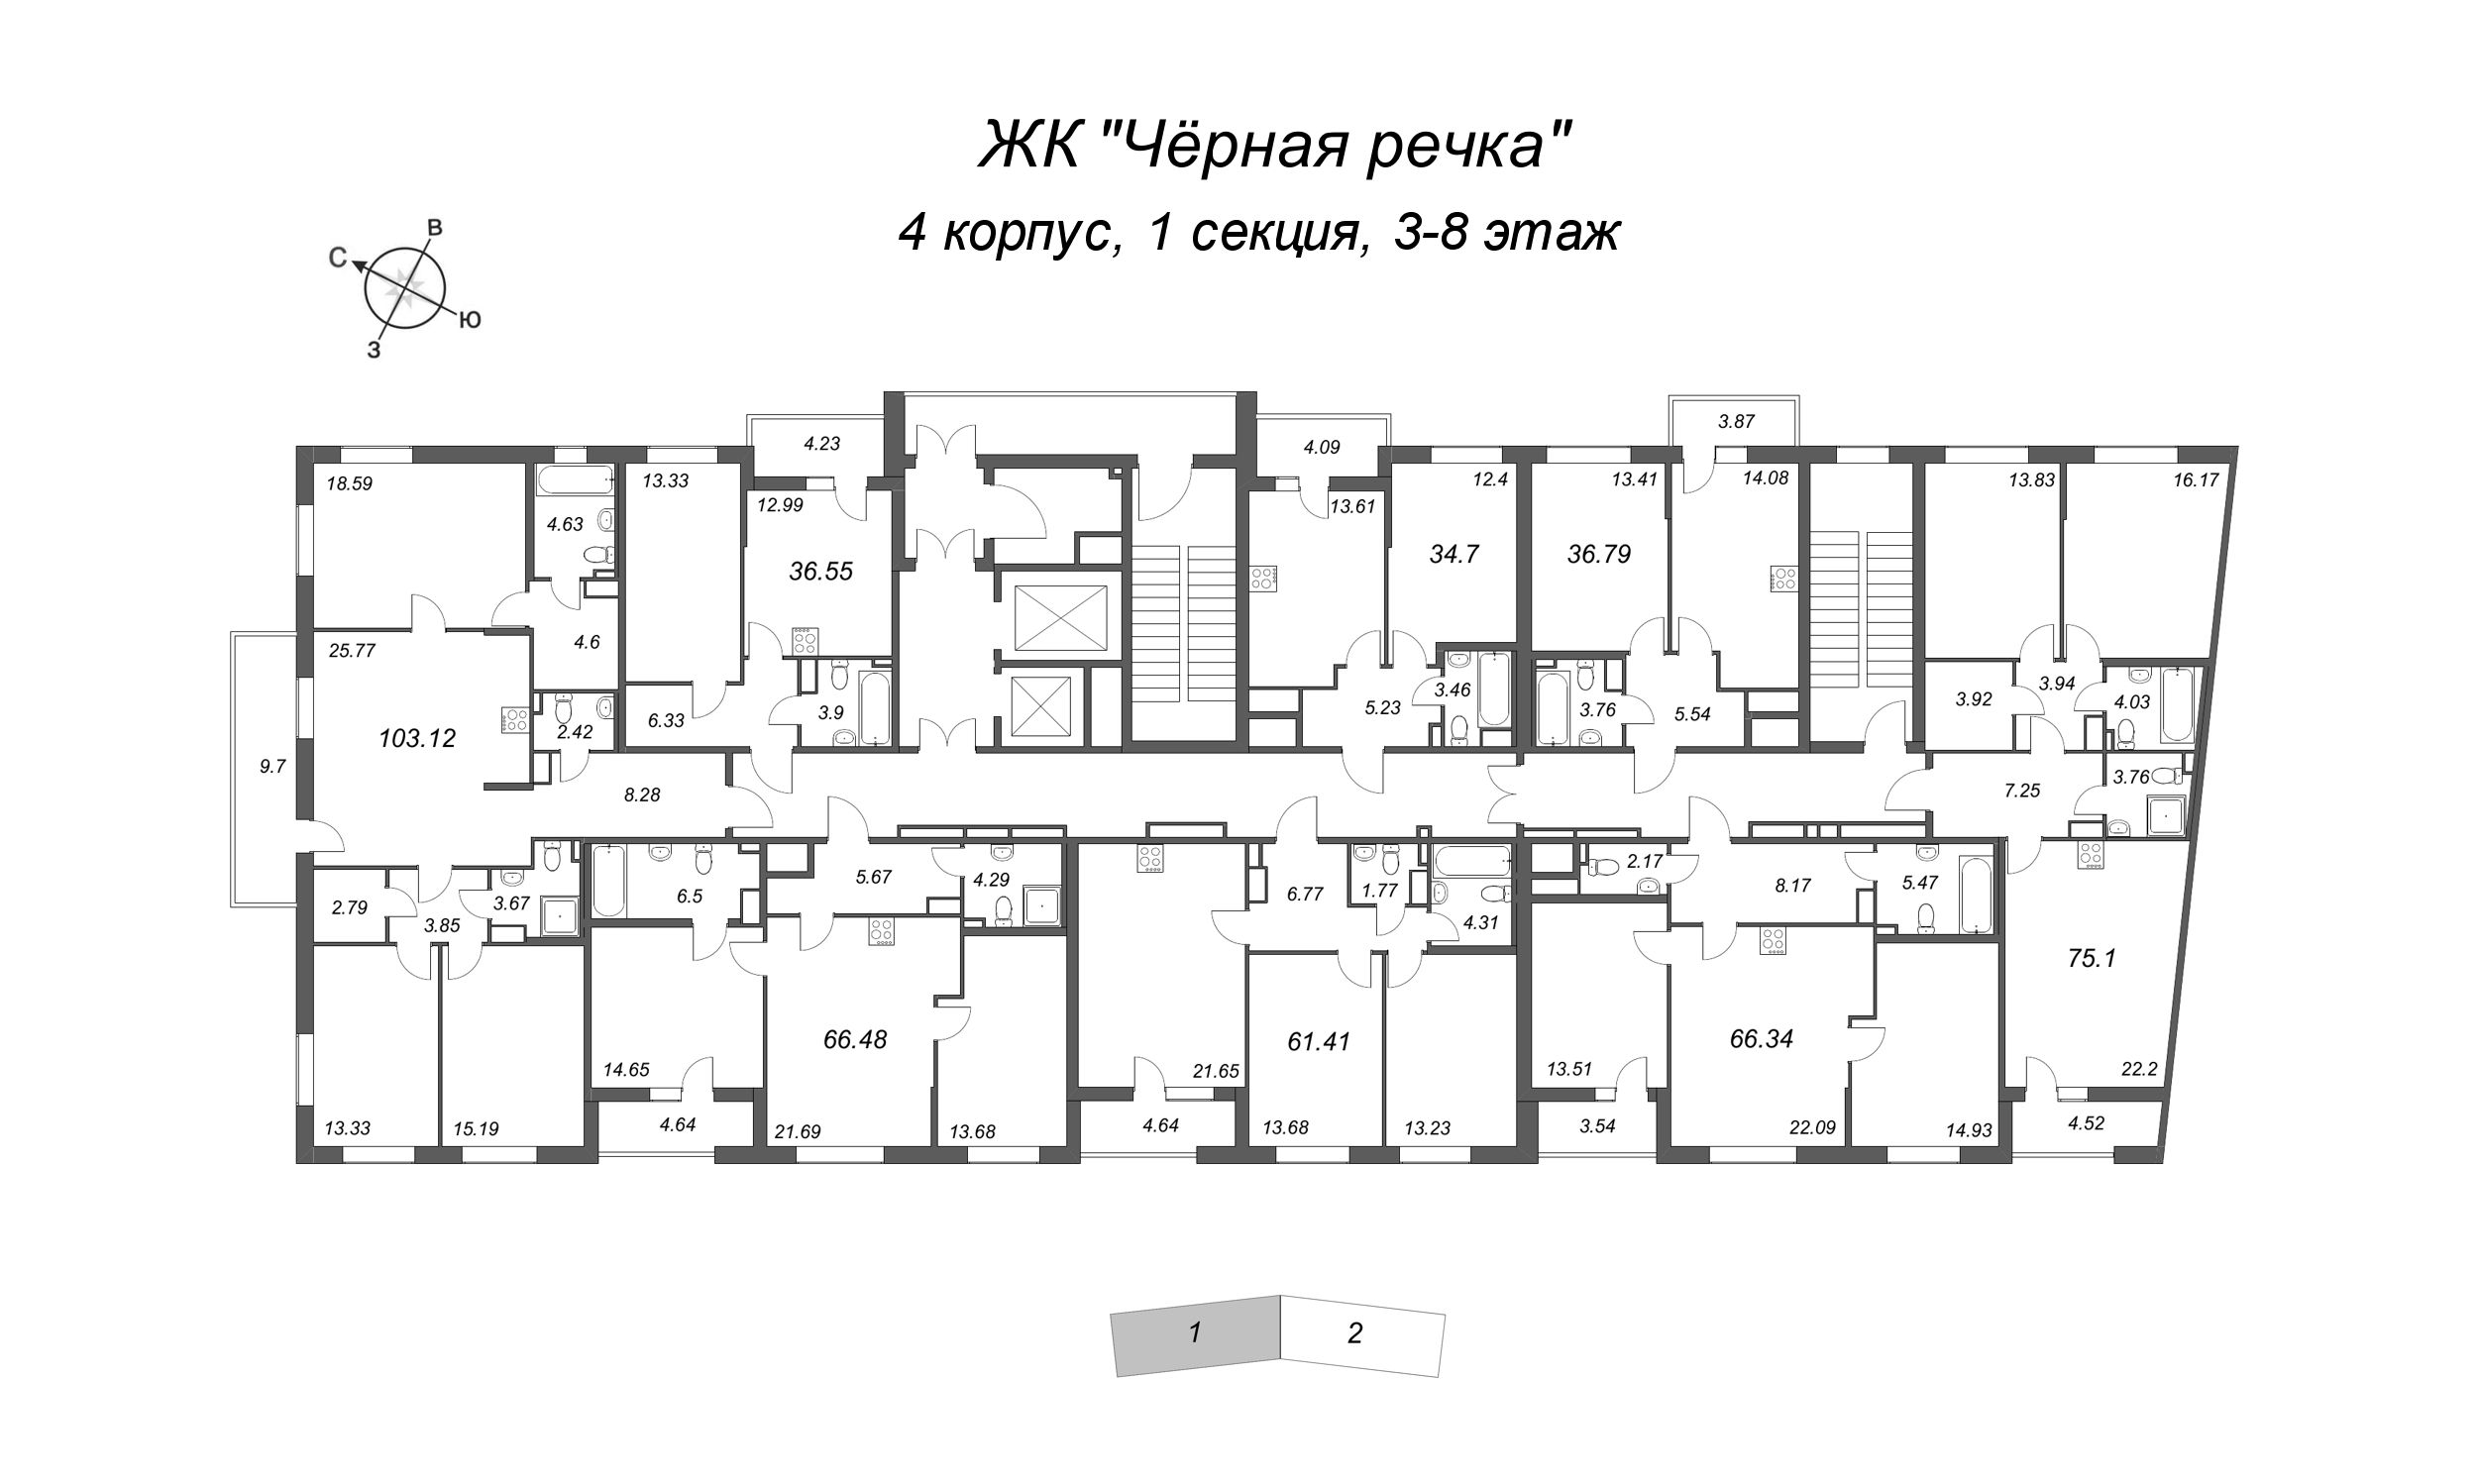 4-комнатная (Евро) квартира, 103.12 м² - планировка этажа